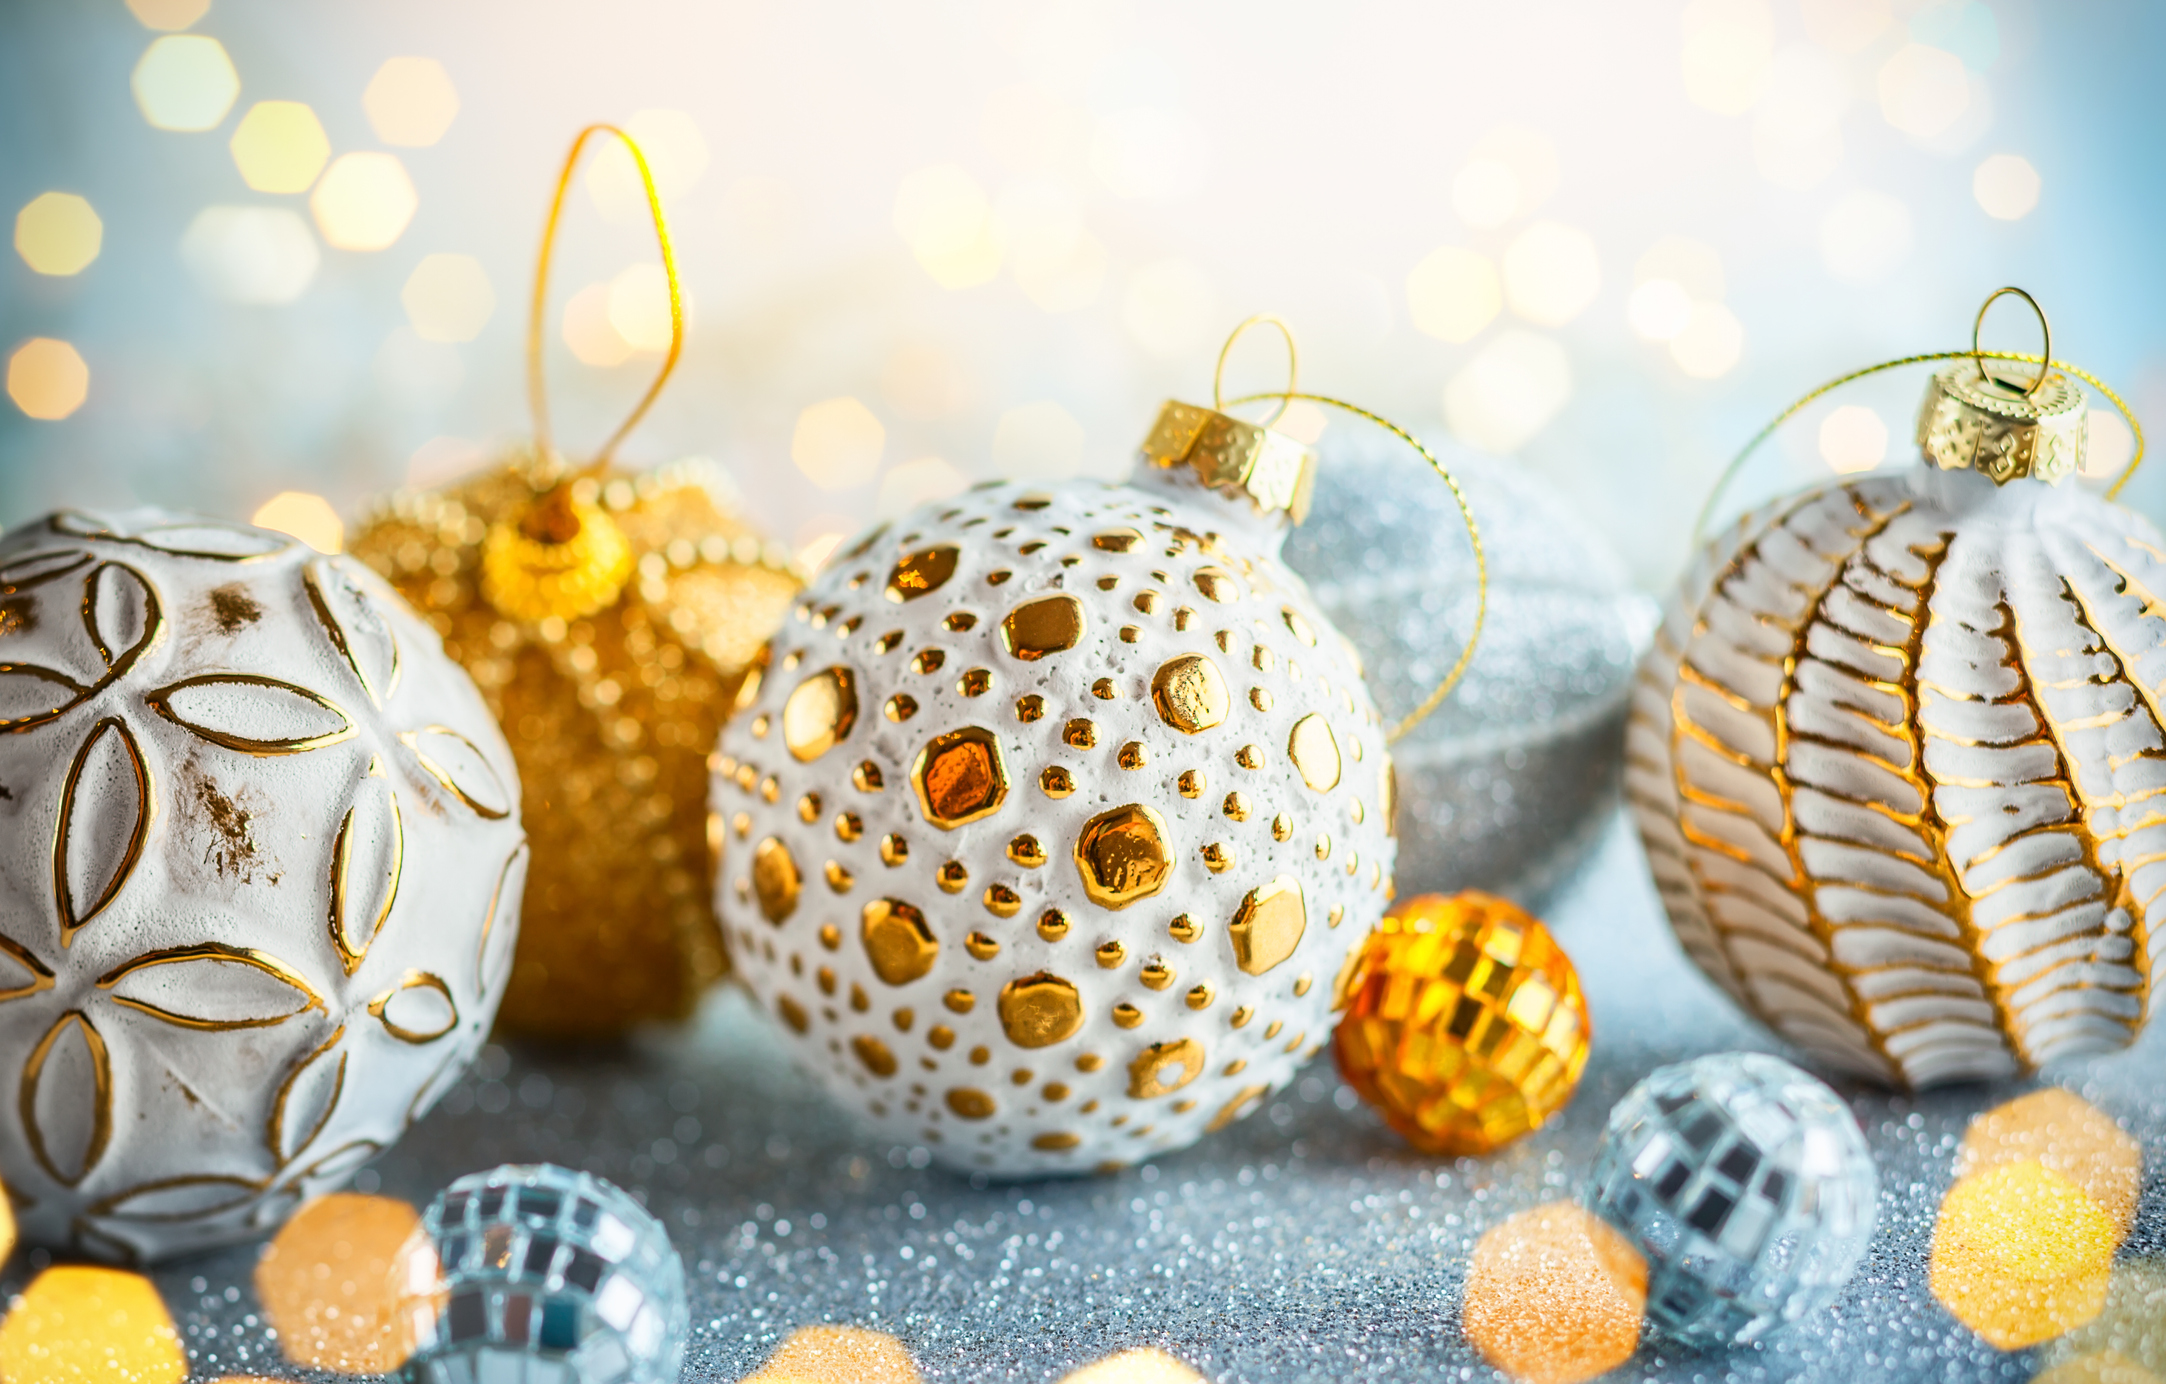 Which Christmas Decoration Are You? | Beano.com